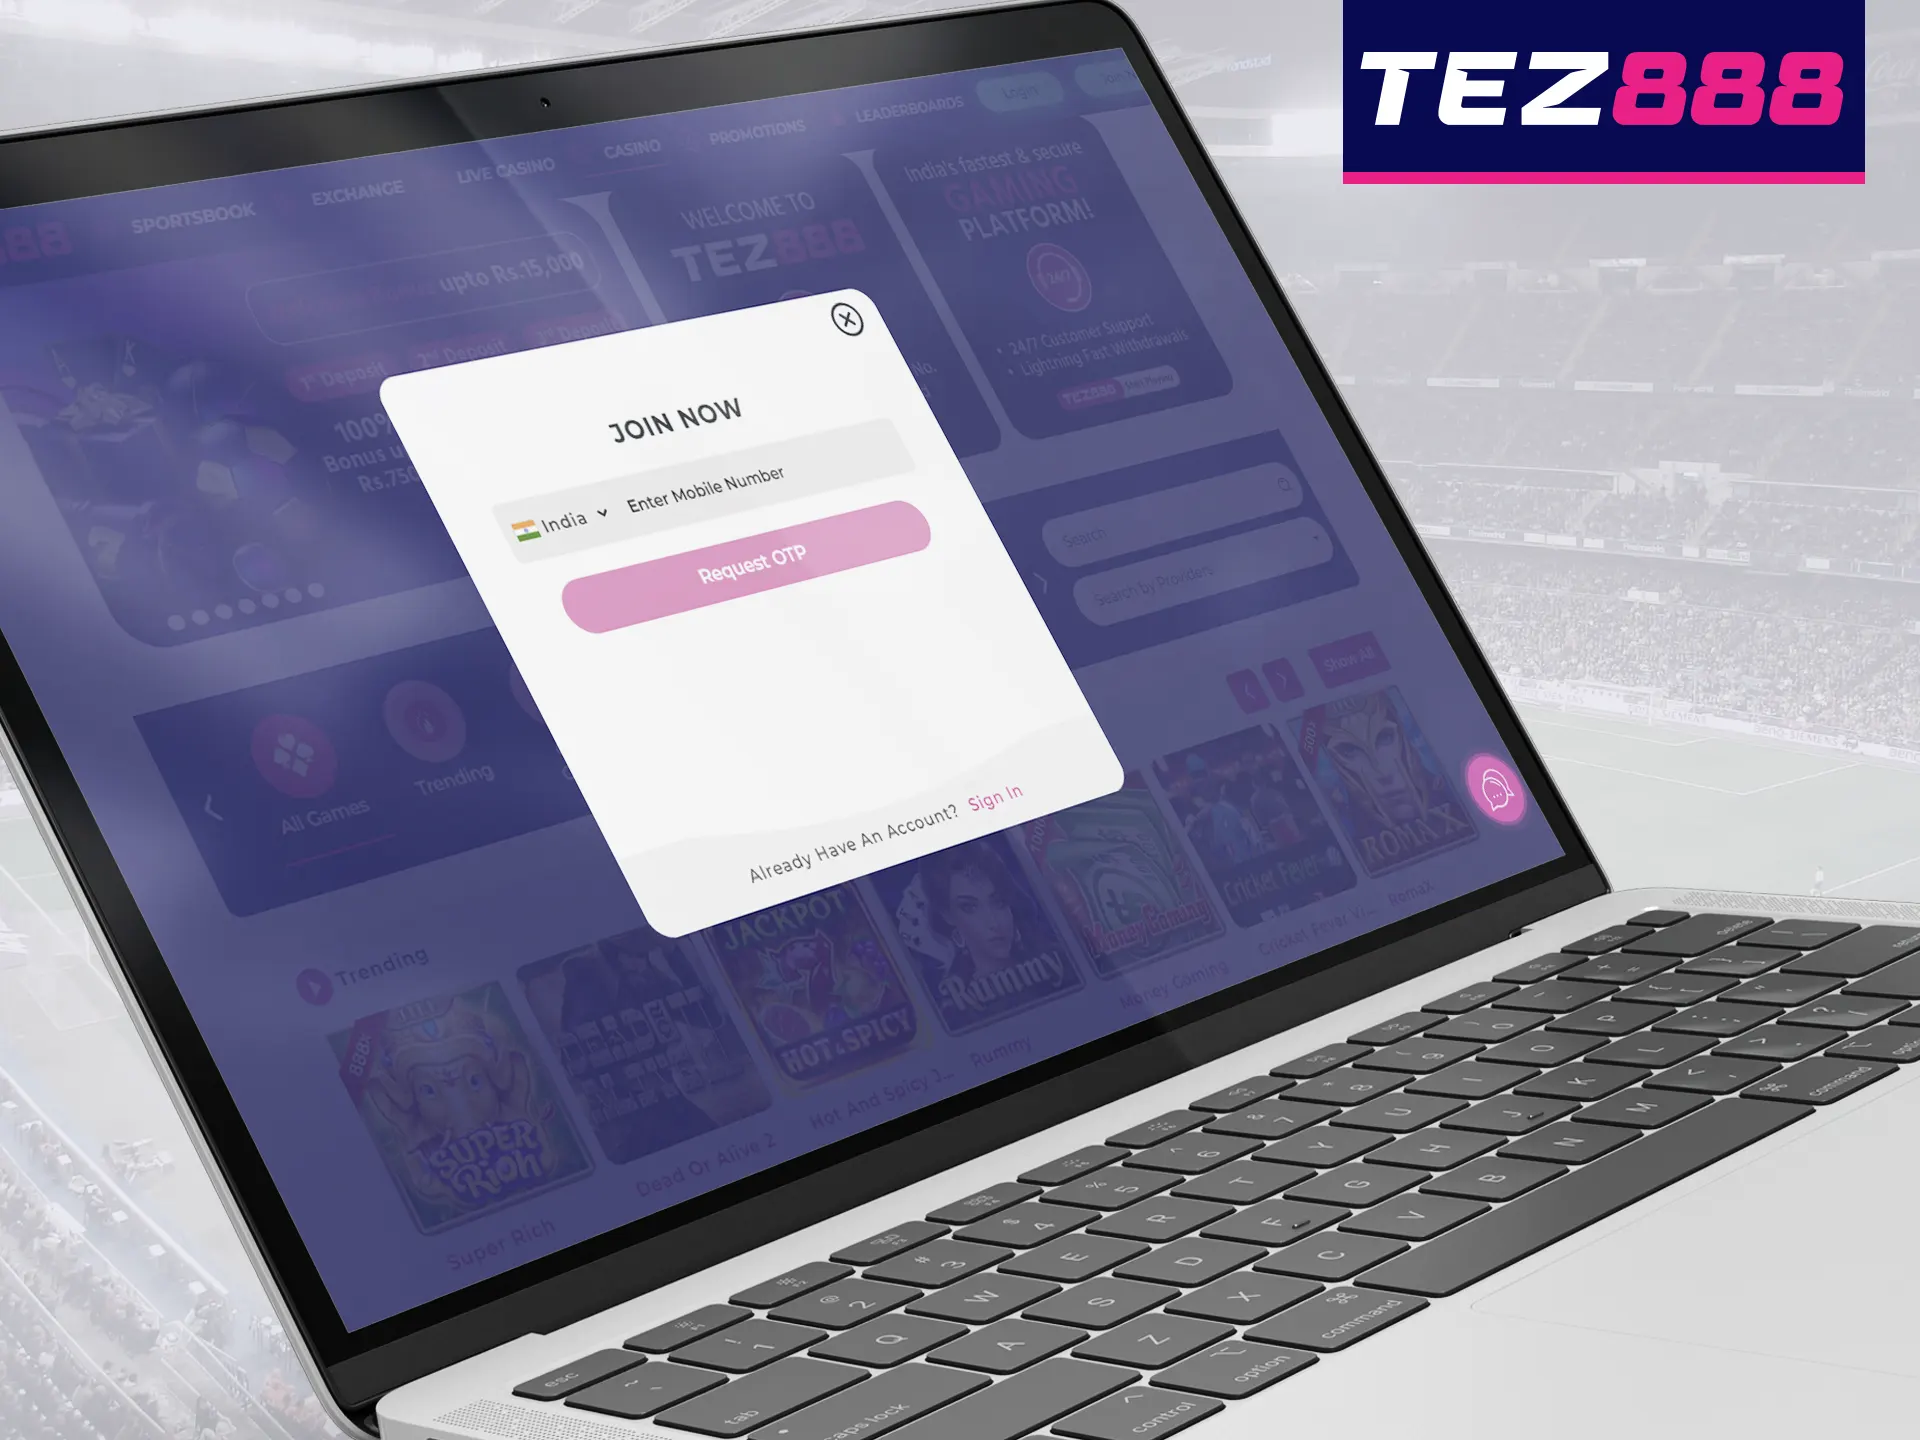 Register on the Tez888 website.